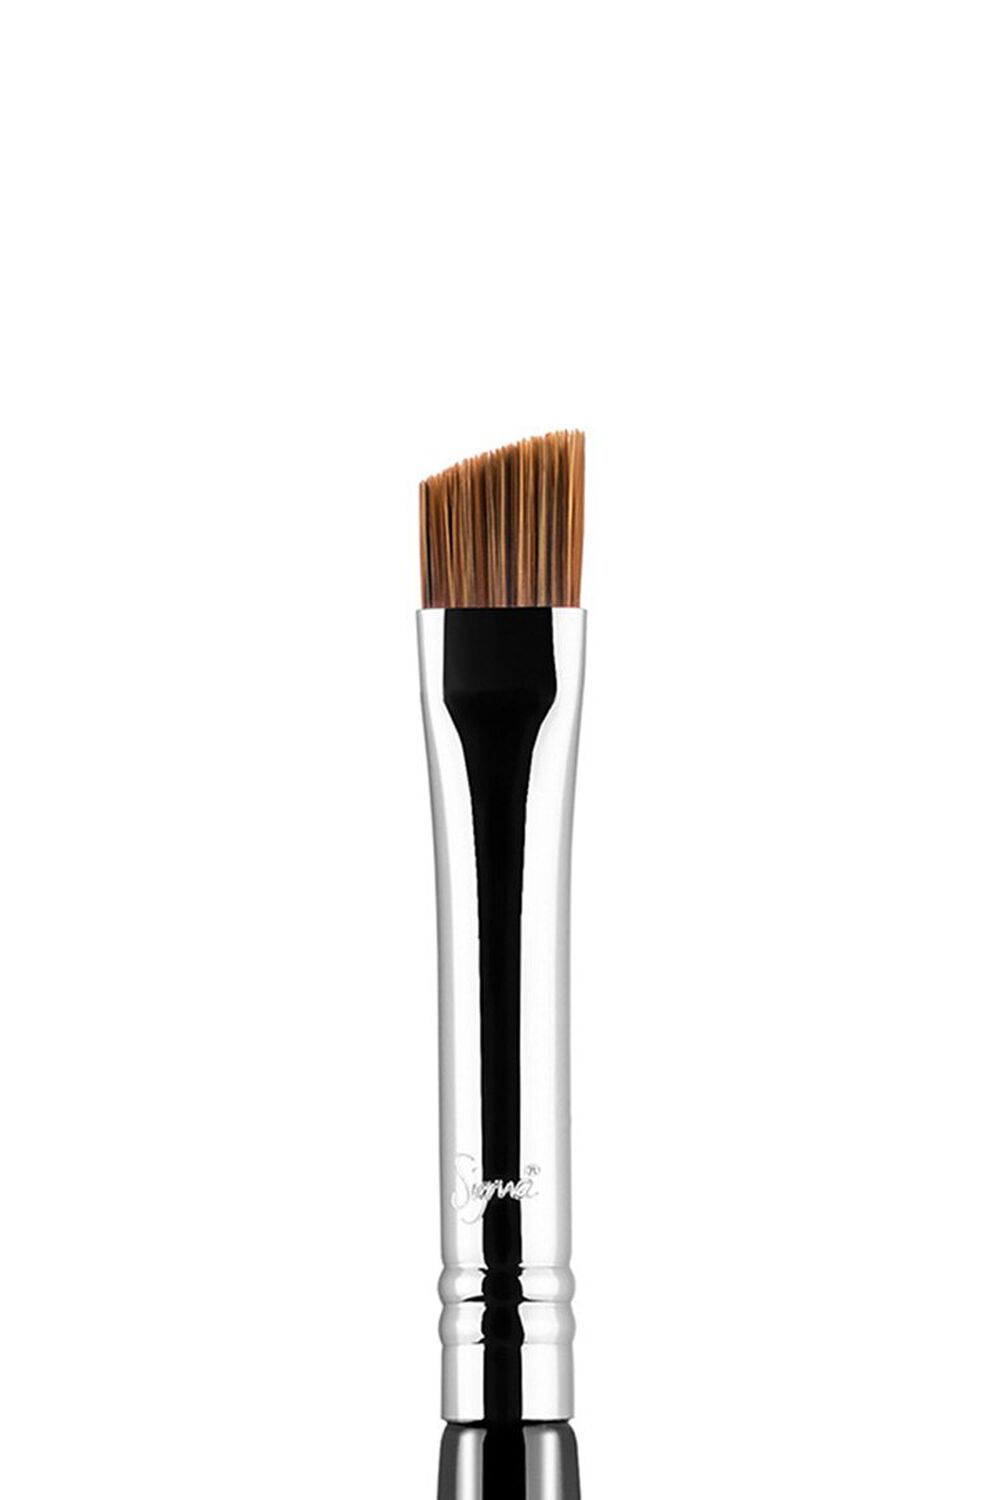 Sigma Beauty E75 – Angled Brow Brush